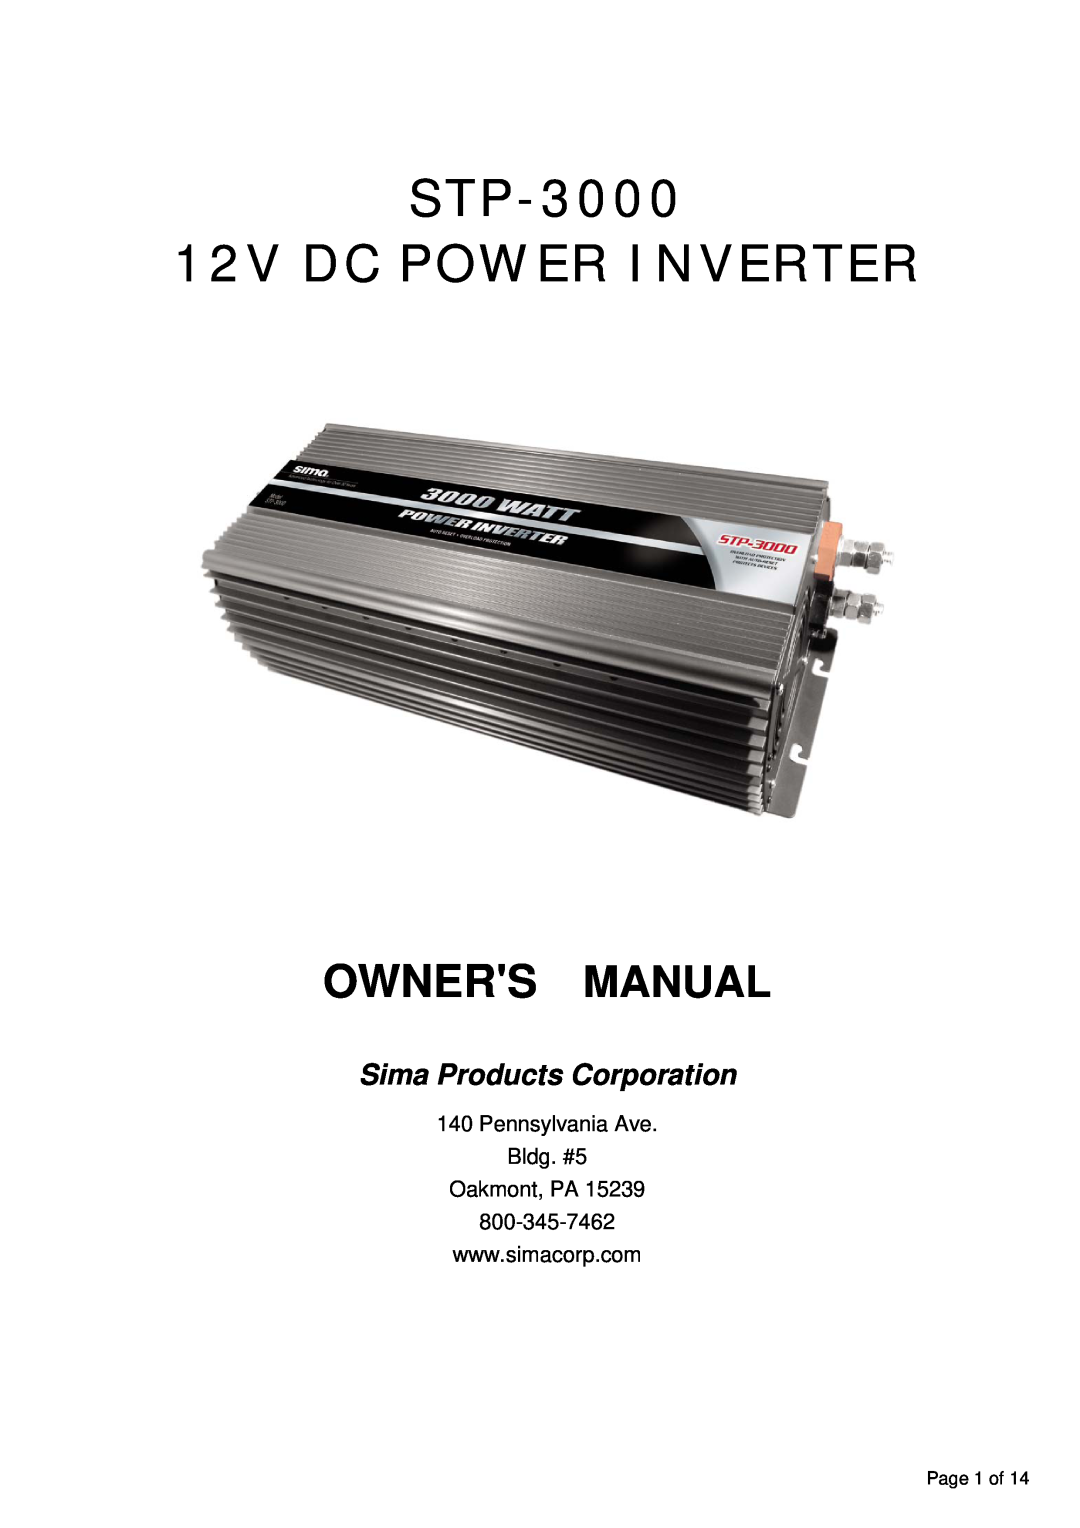 Sima Products owner manual Pennsylvania Ave Bldg. #5 Oakmont, PA, STP-3000 12V DC POWER INVERTER, Owners Manual 